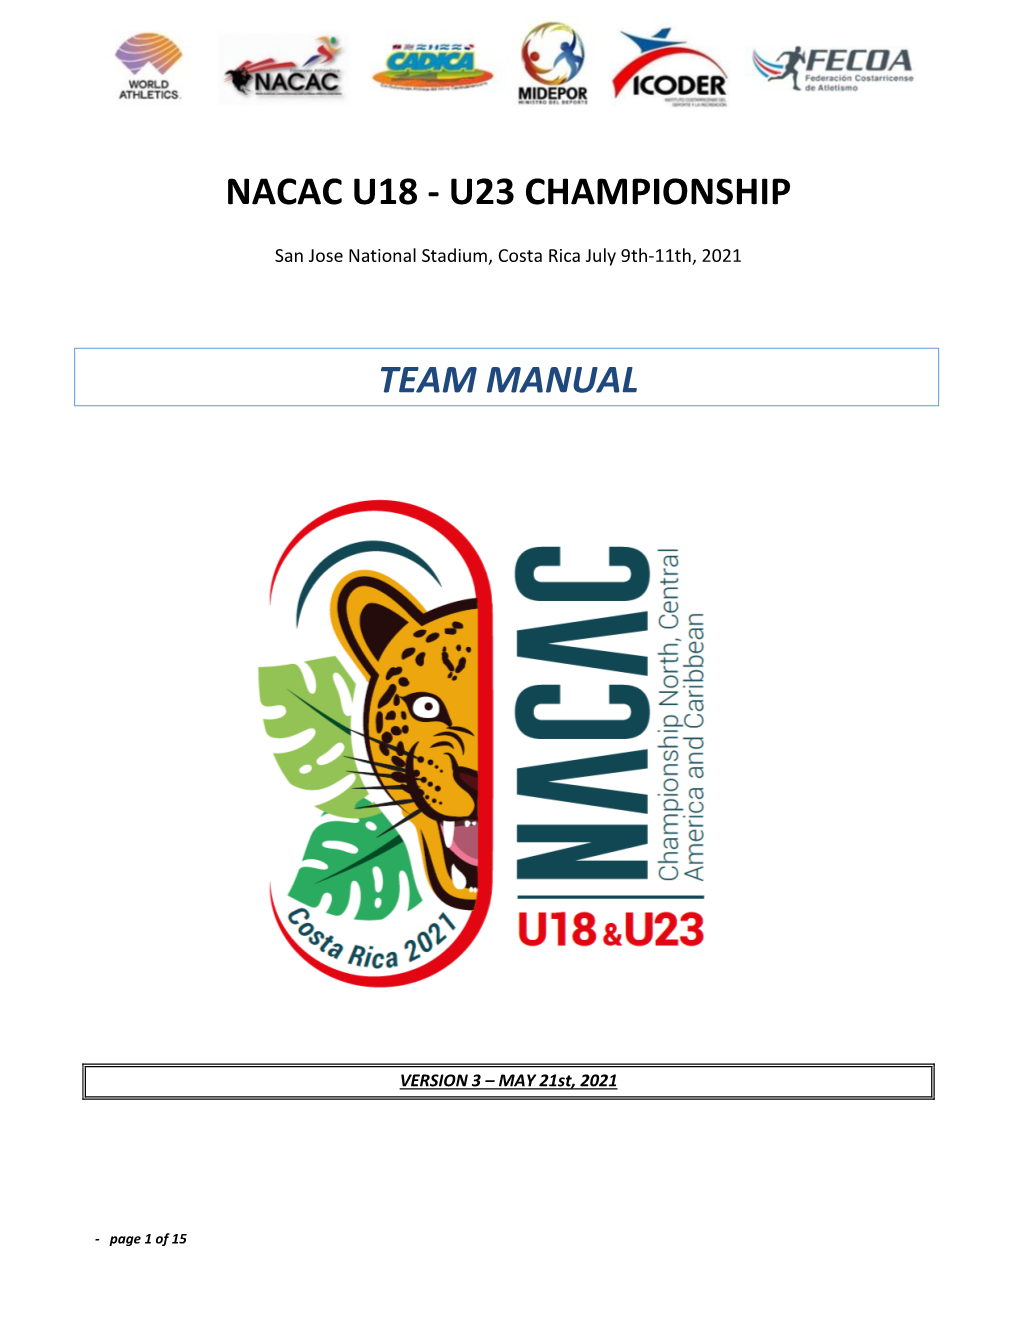 U23 Championship Team Manual